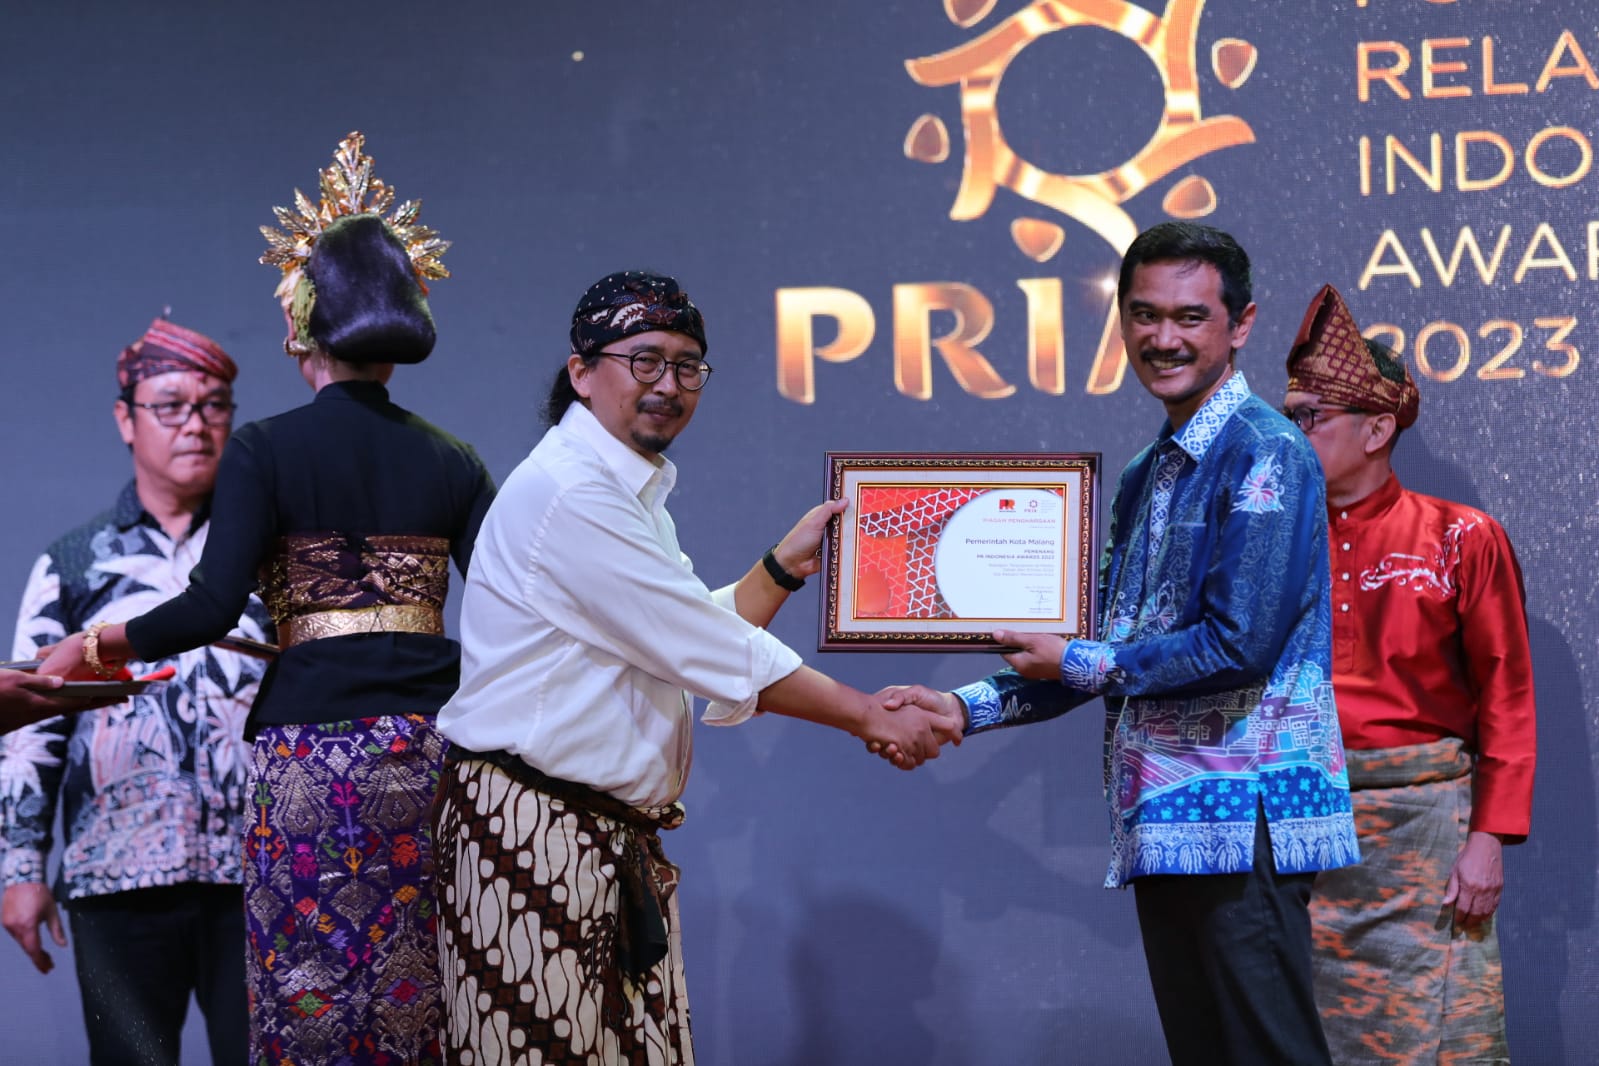 Kerja Sama Apik dengan Media, Kota Malang Terima Penghargaan PRIA Award 2023